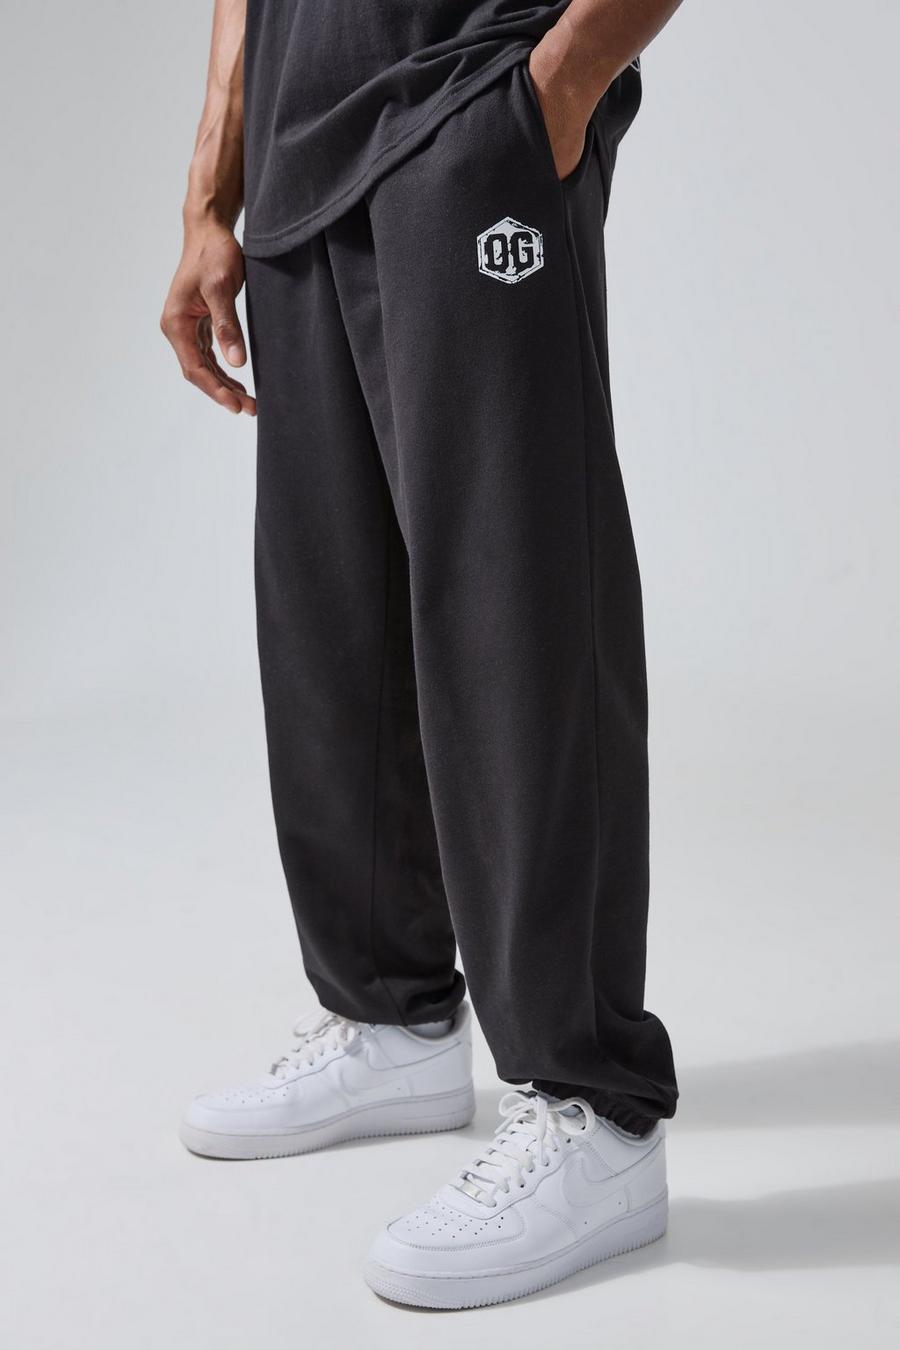 Pantaloni tuta oversize Man Active X Og Gym, Black